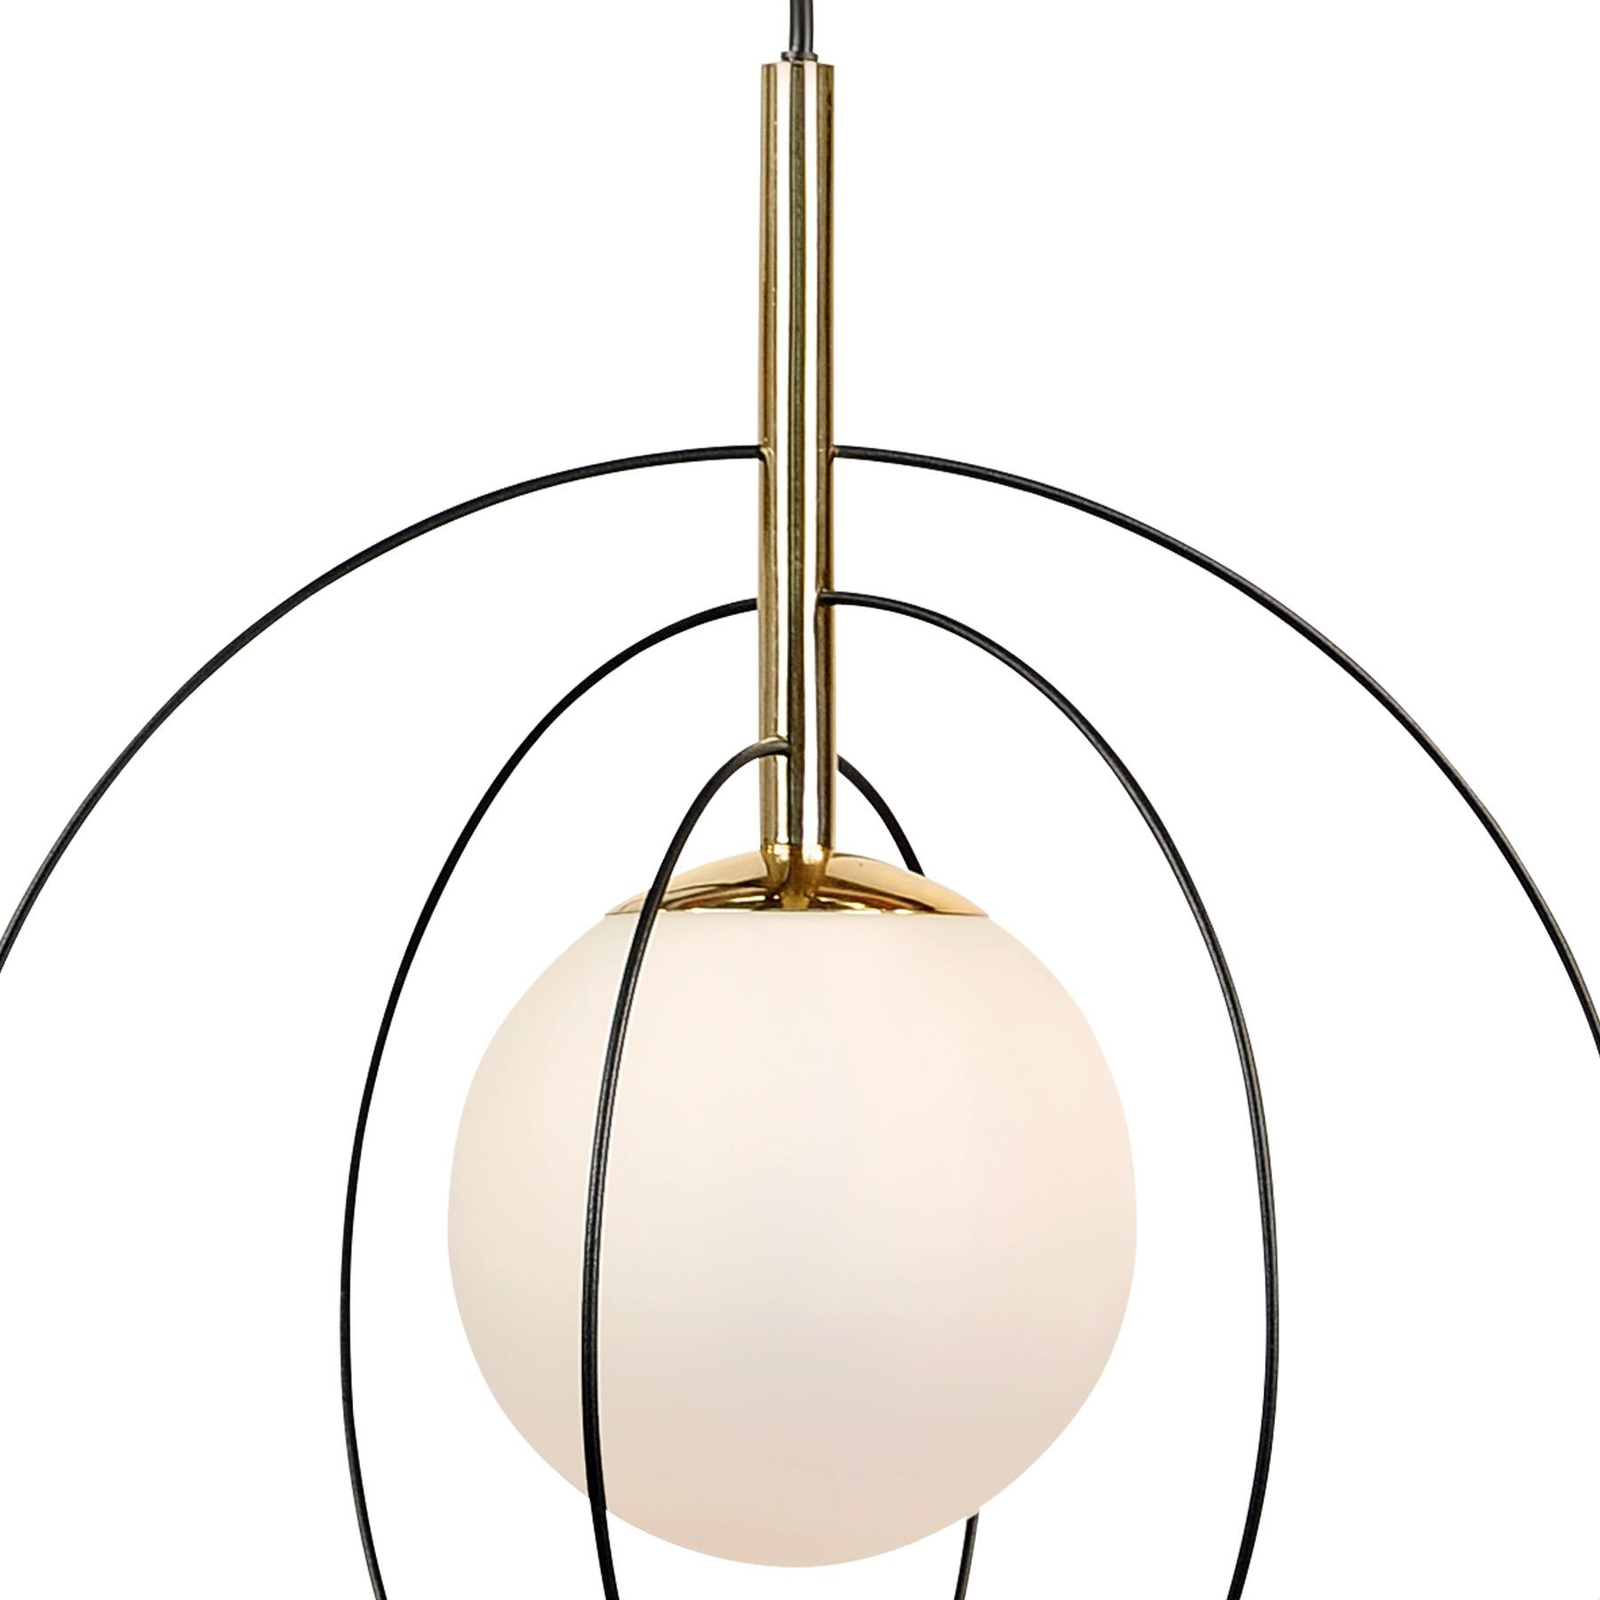 Euluna hanglamp Spinn, 1-lamp, glas, Ø 35 cm